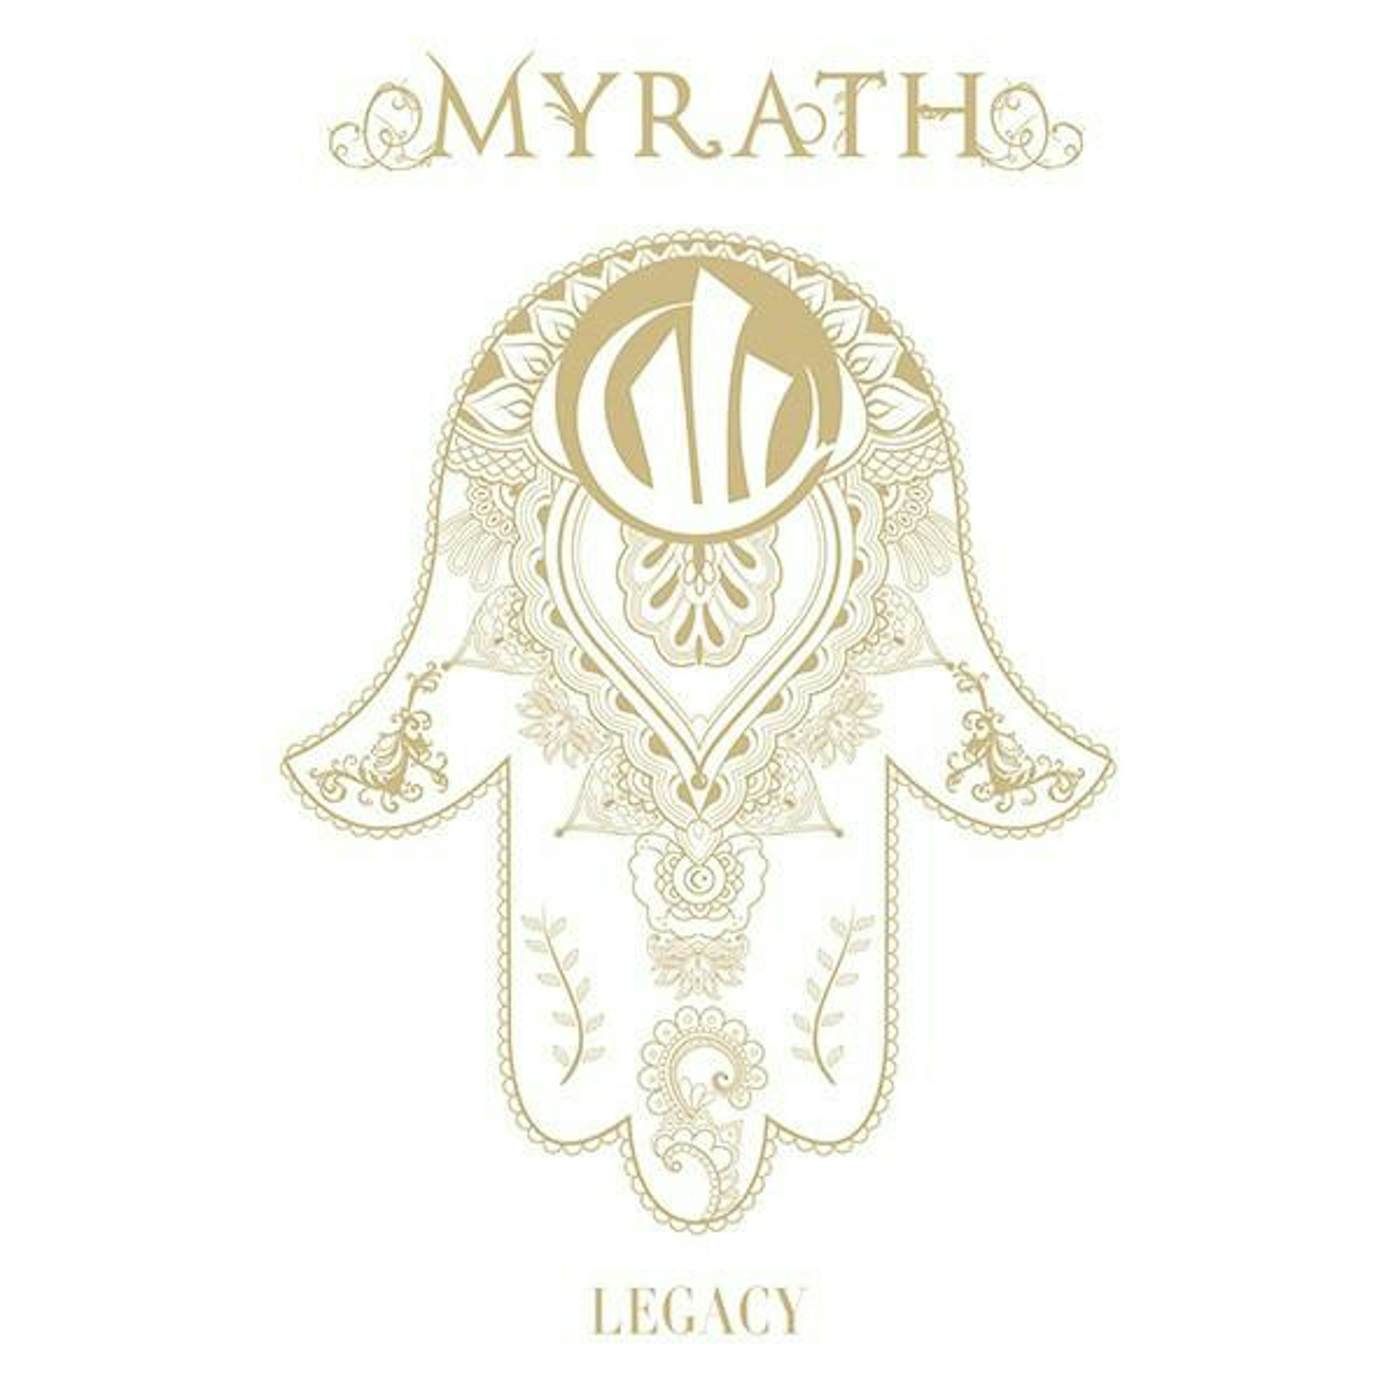 Myrath LEGACY CD